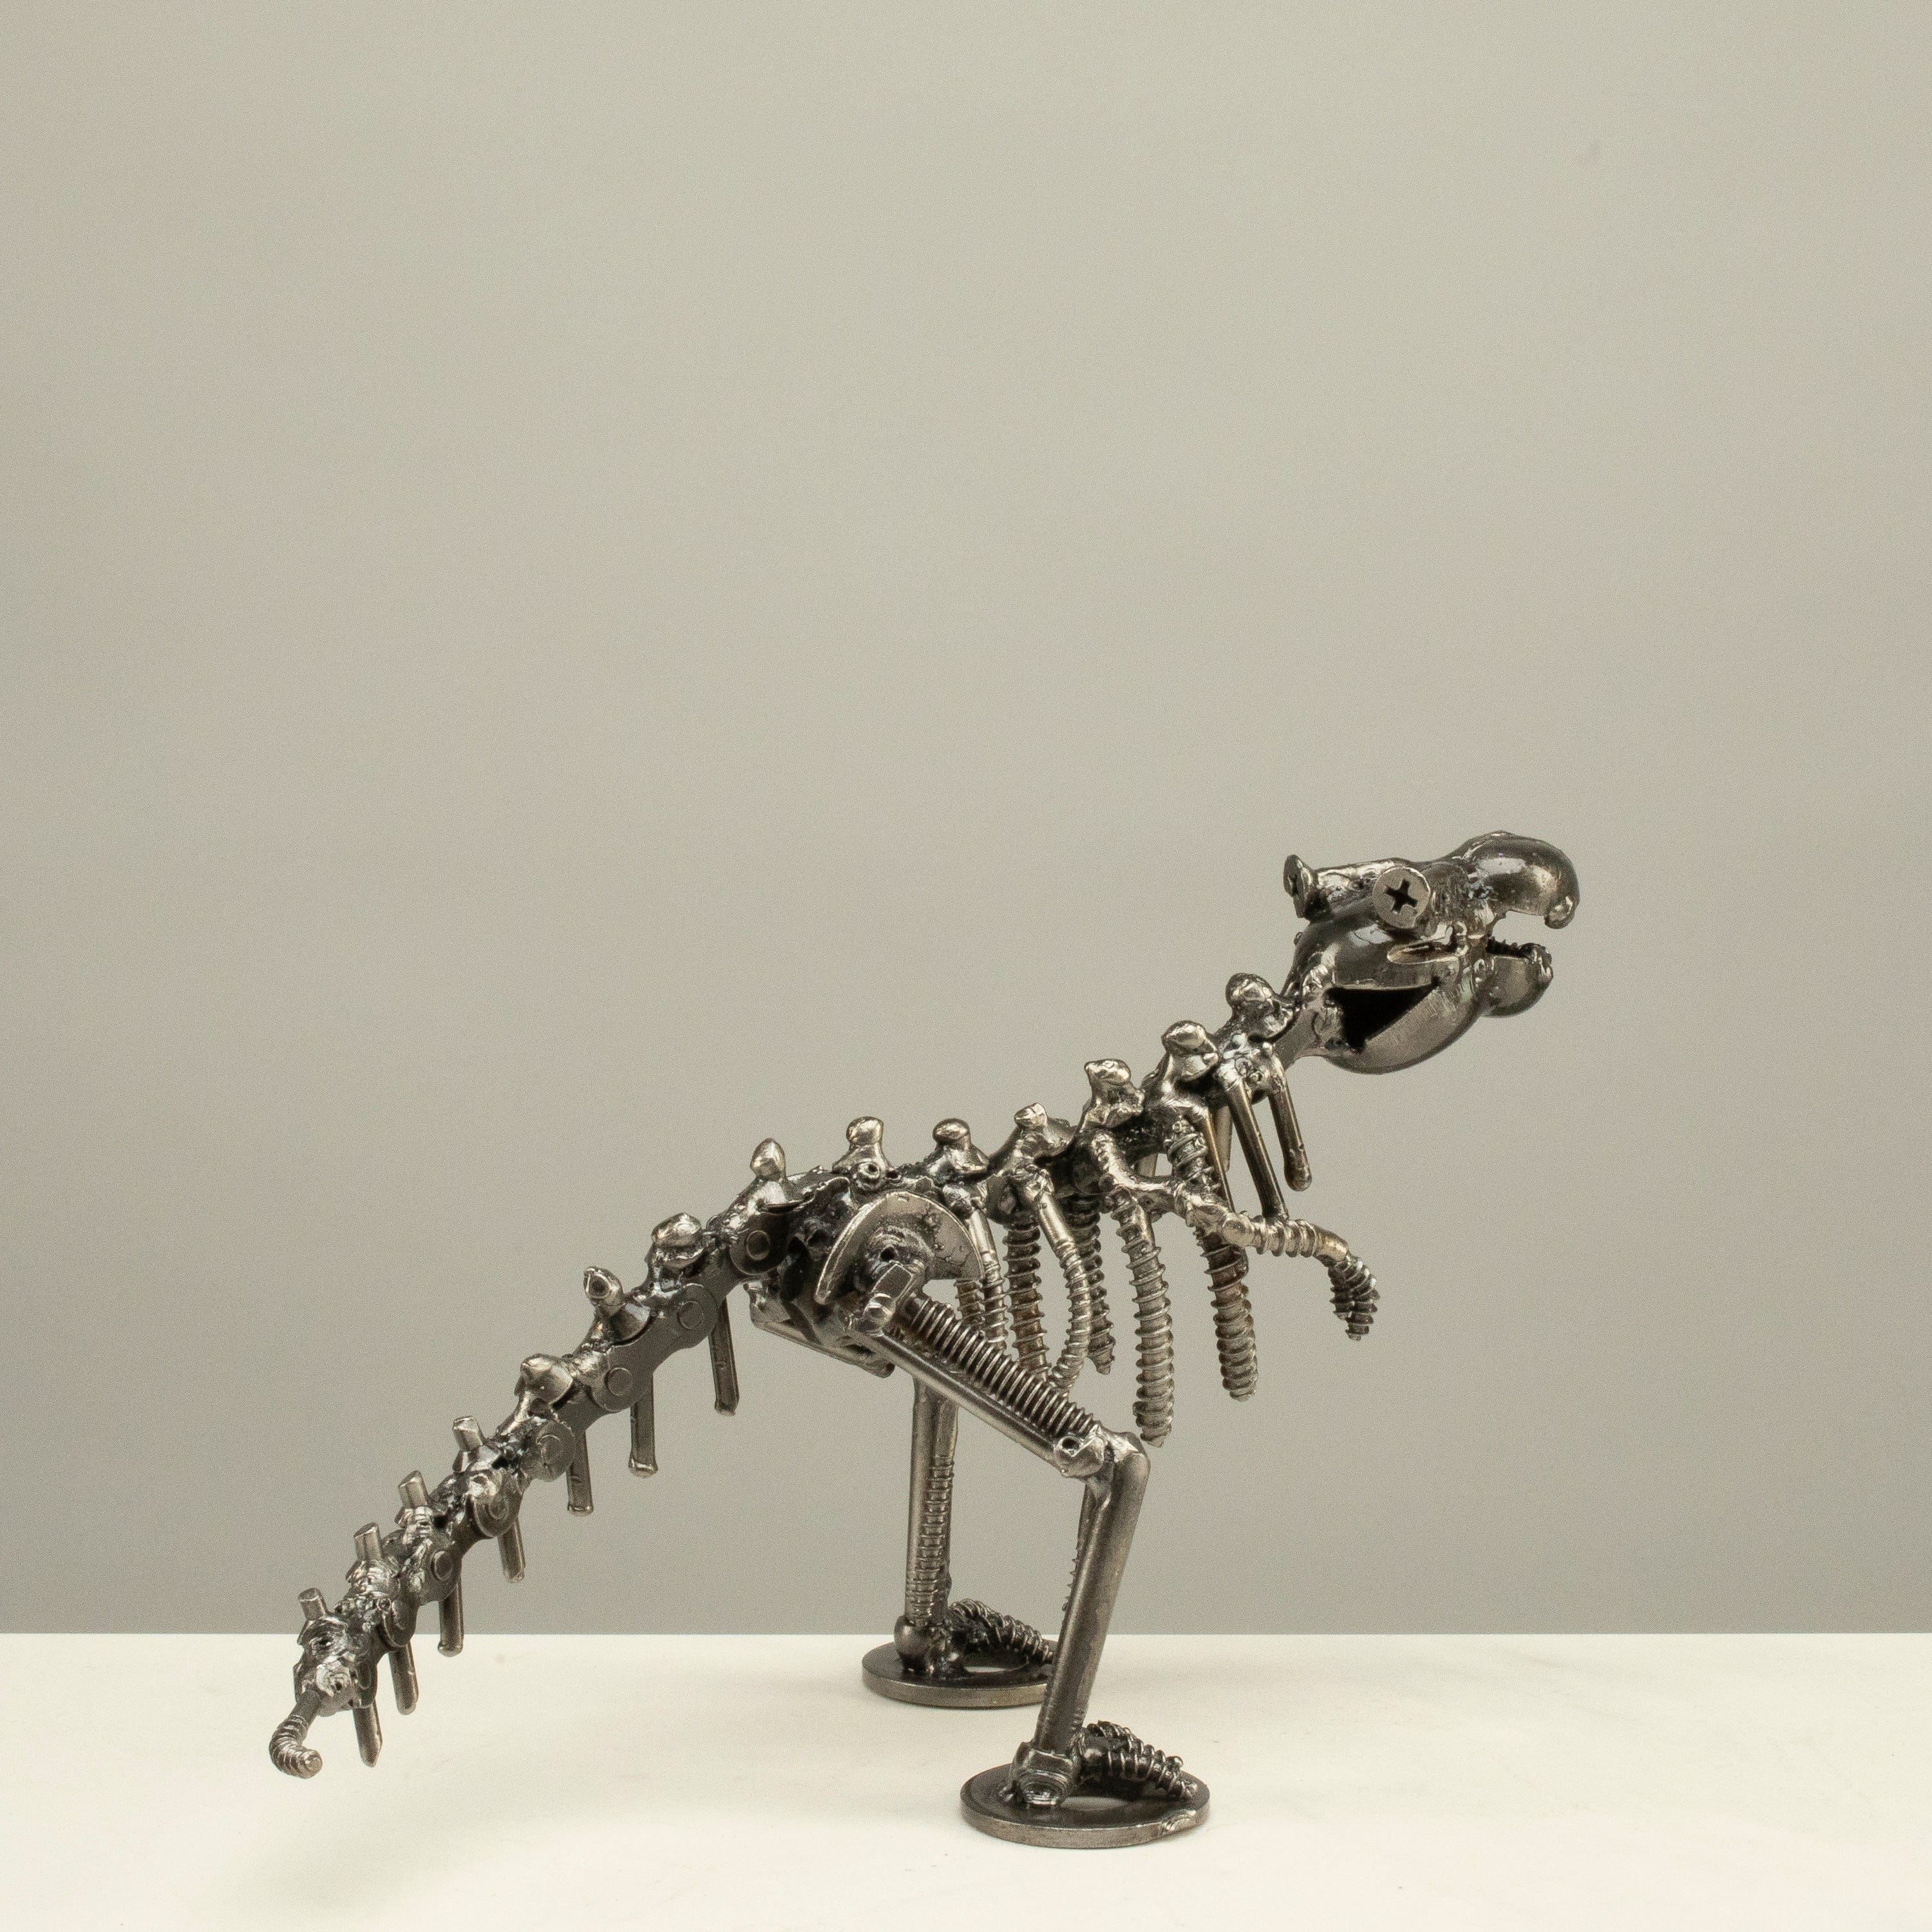 KALIFANO Recycled Metal Art T-Rex Recycled Metal Sculpture RMS-300TRX-N